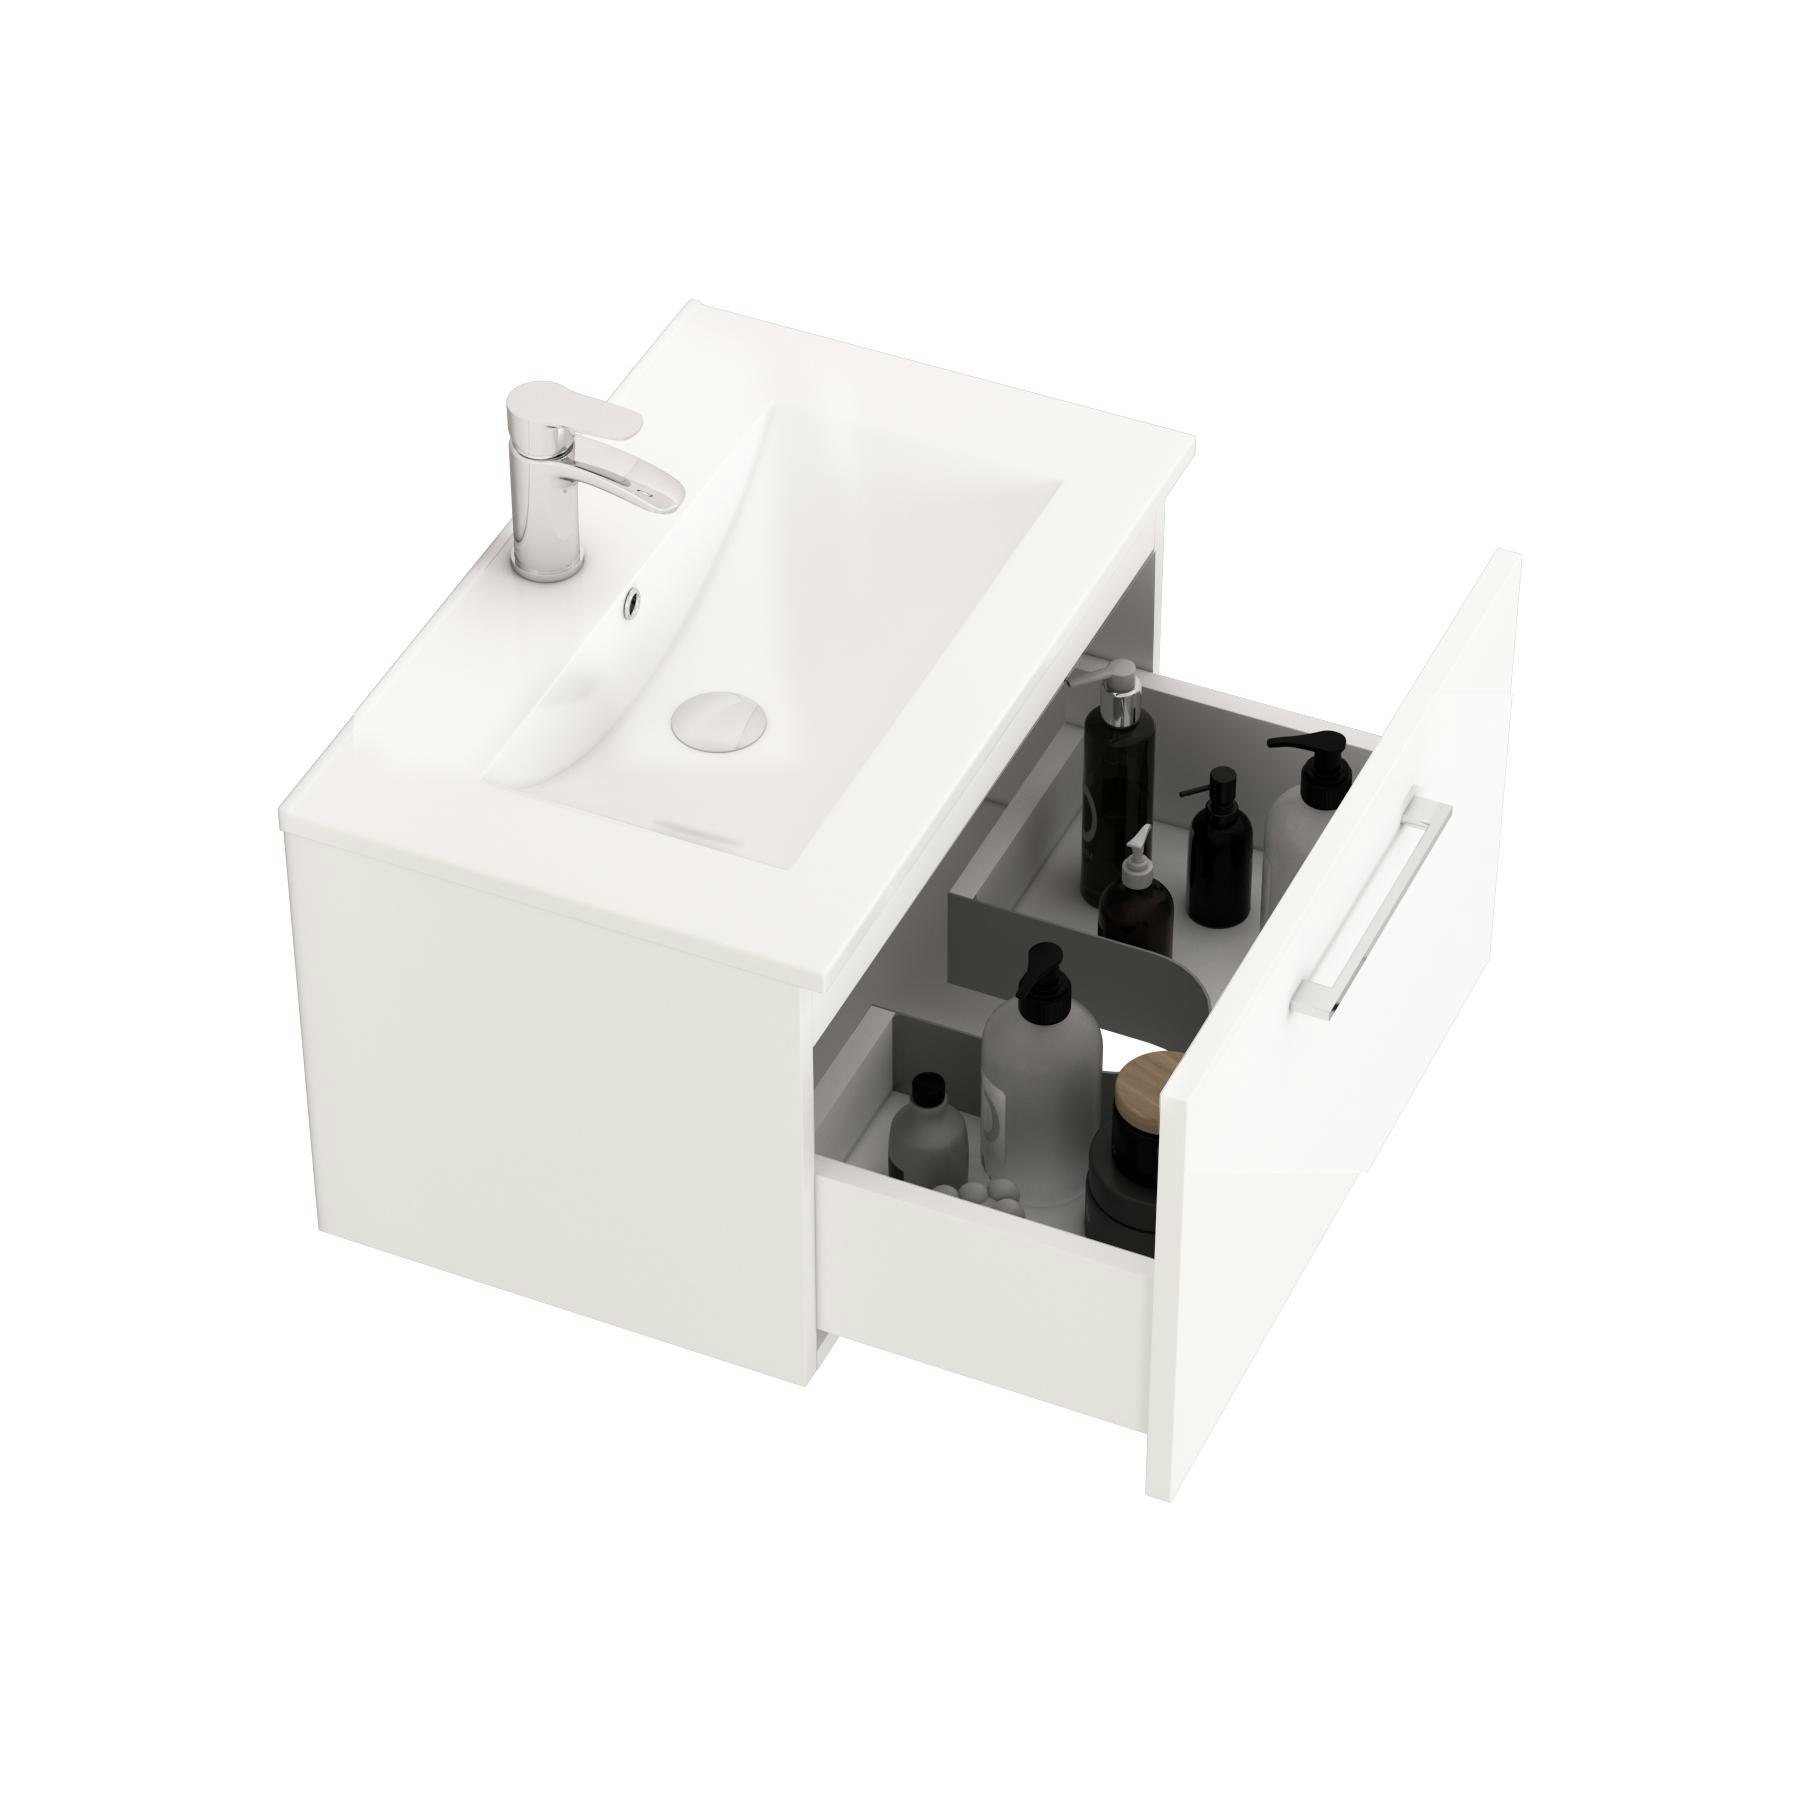 Modena 600mm Satin White Wall Hung Vanity Unit 1 Drawer Mid-Edge Basin - Royal Bathrooms